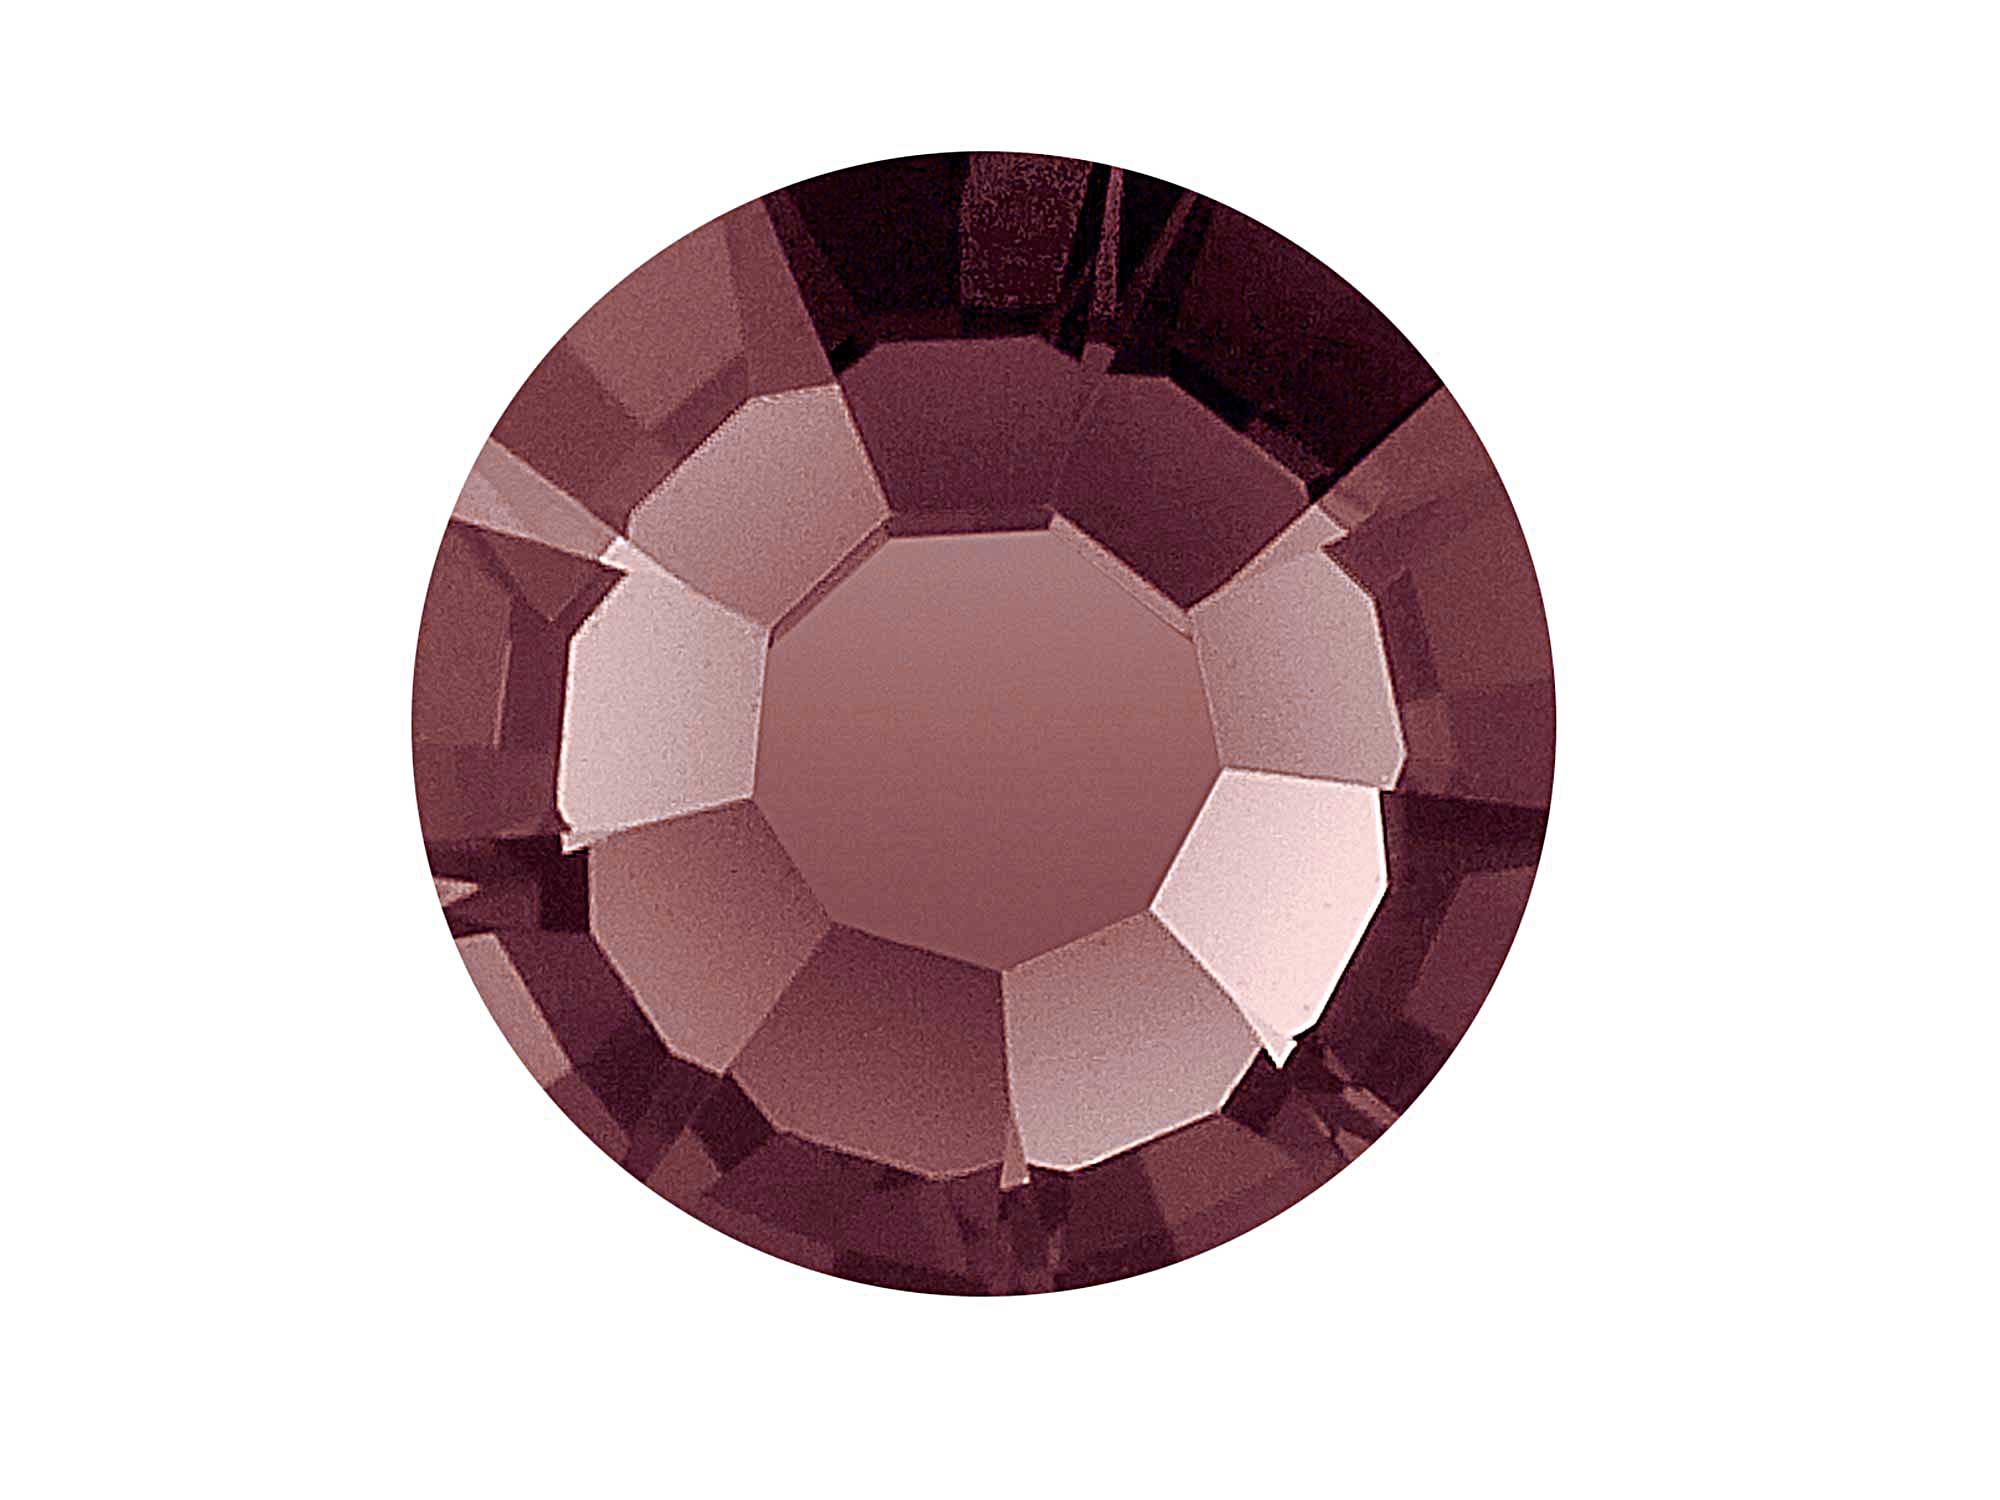 Burgundy, Preciosa VIVA or MAXIMA Chaton Roses (Rhinestone Flatbacks), Genuine Czech Crystals